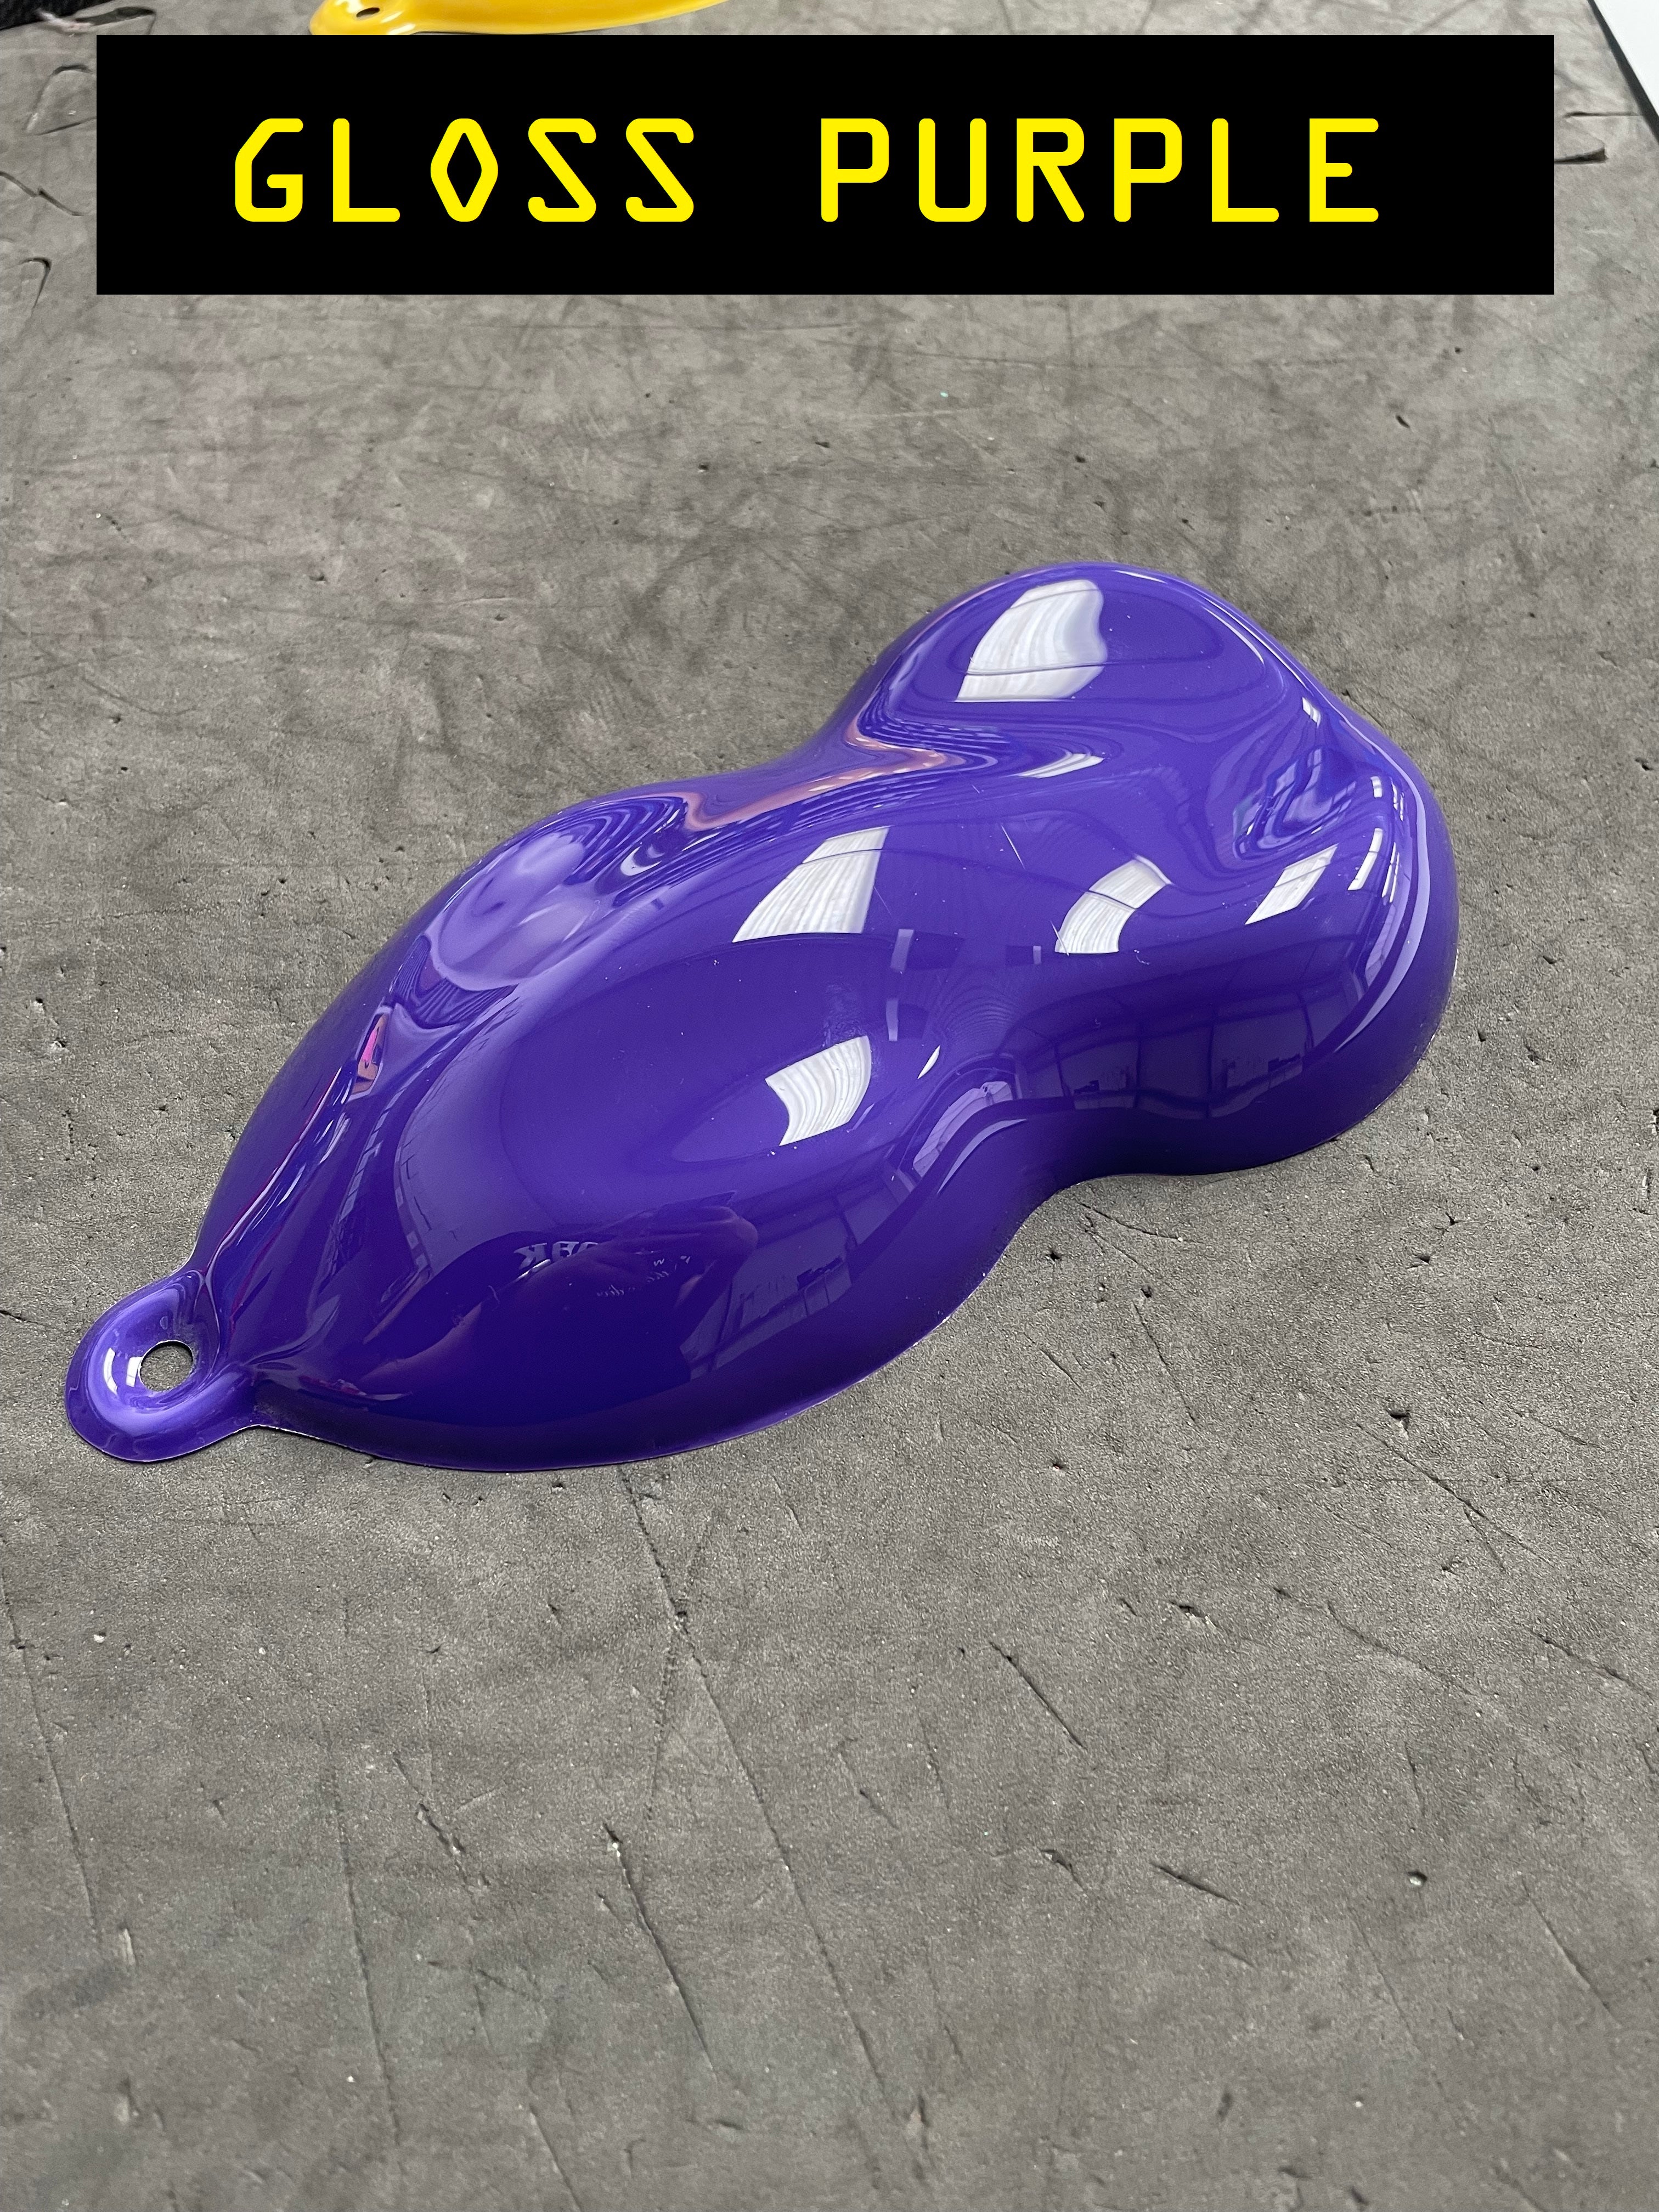 Mk6 Fiesta dress up parts in gloss purple